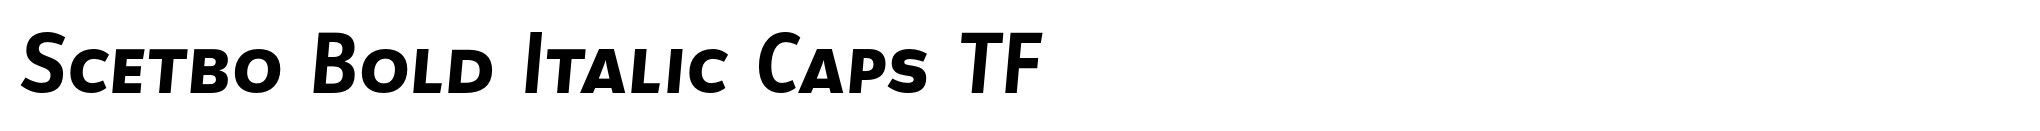 Scetbo Bold Italic Caps TF image